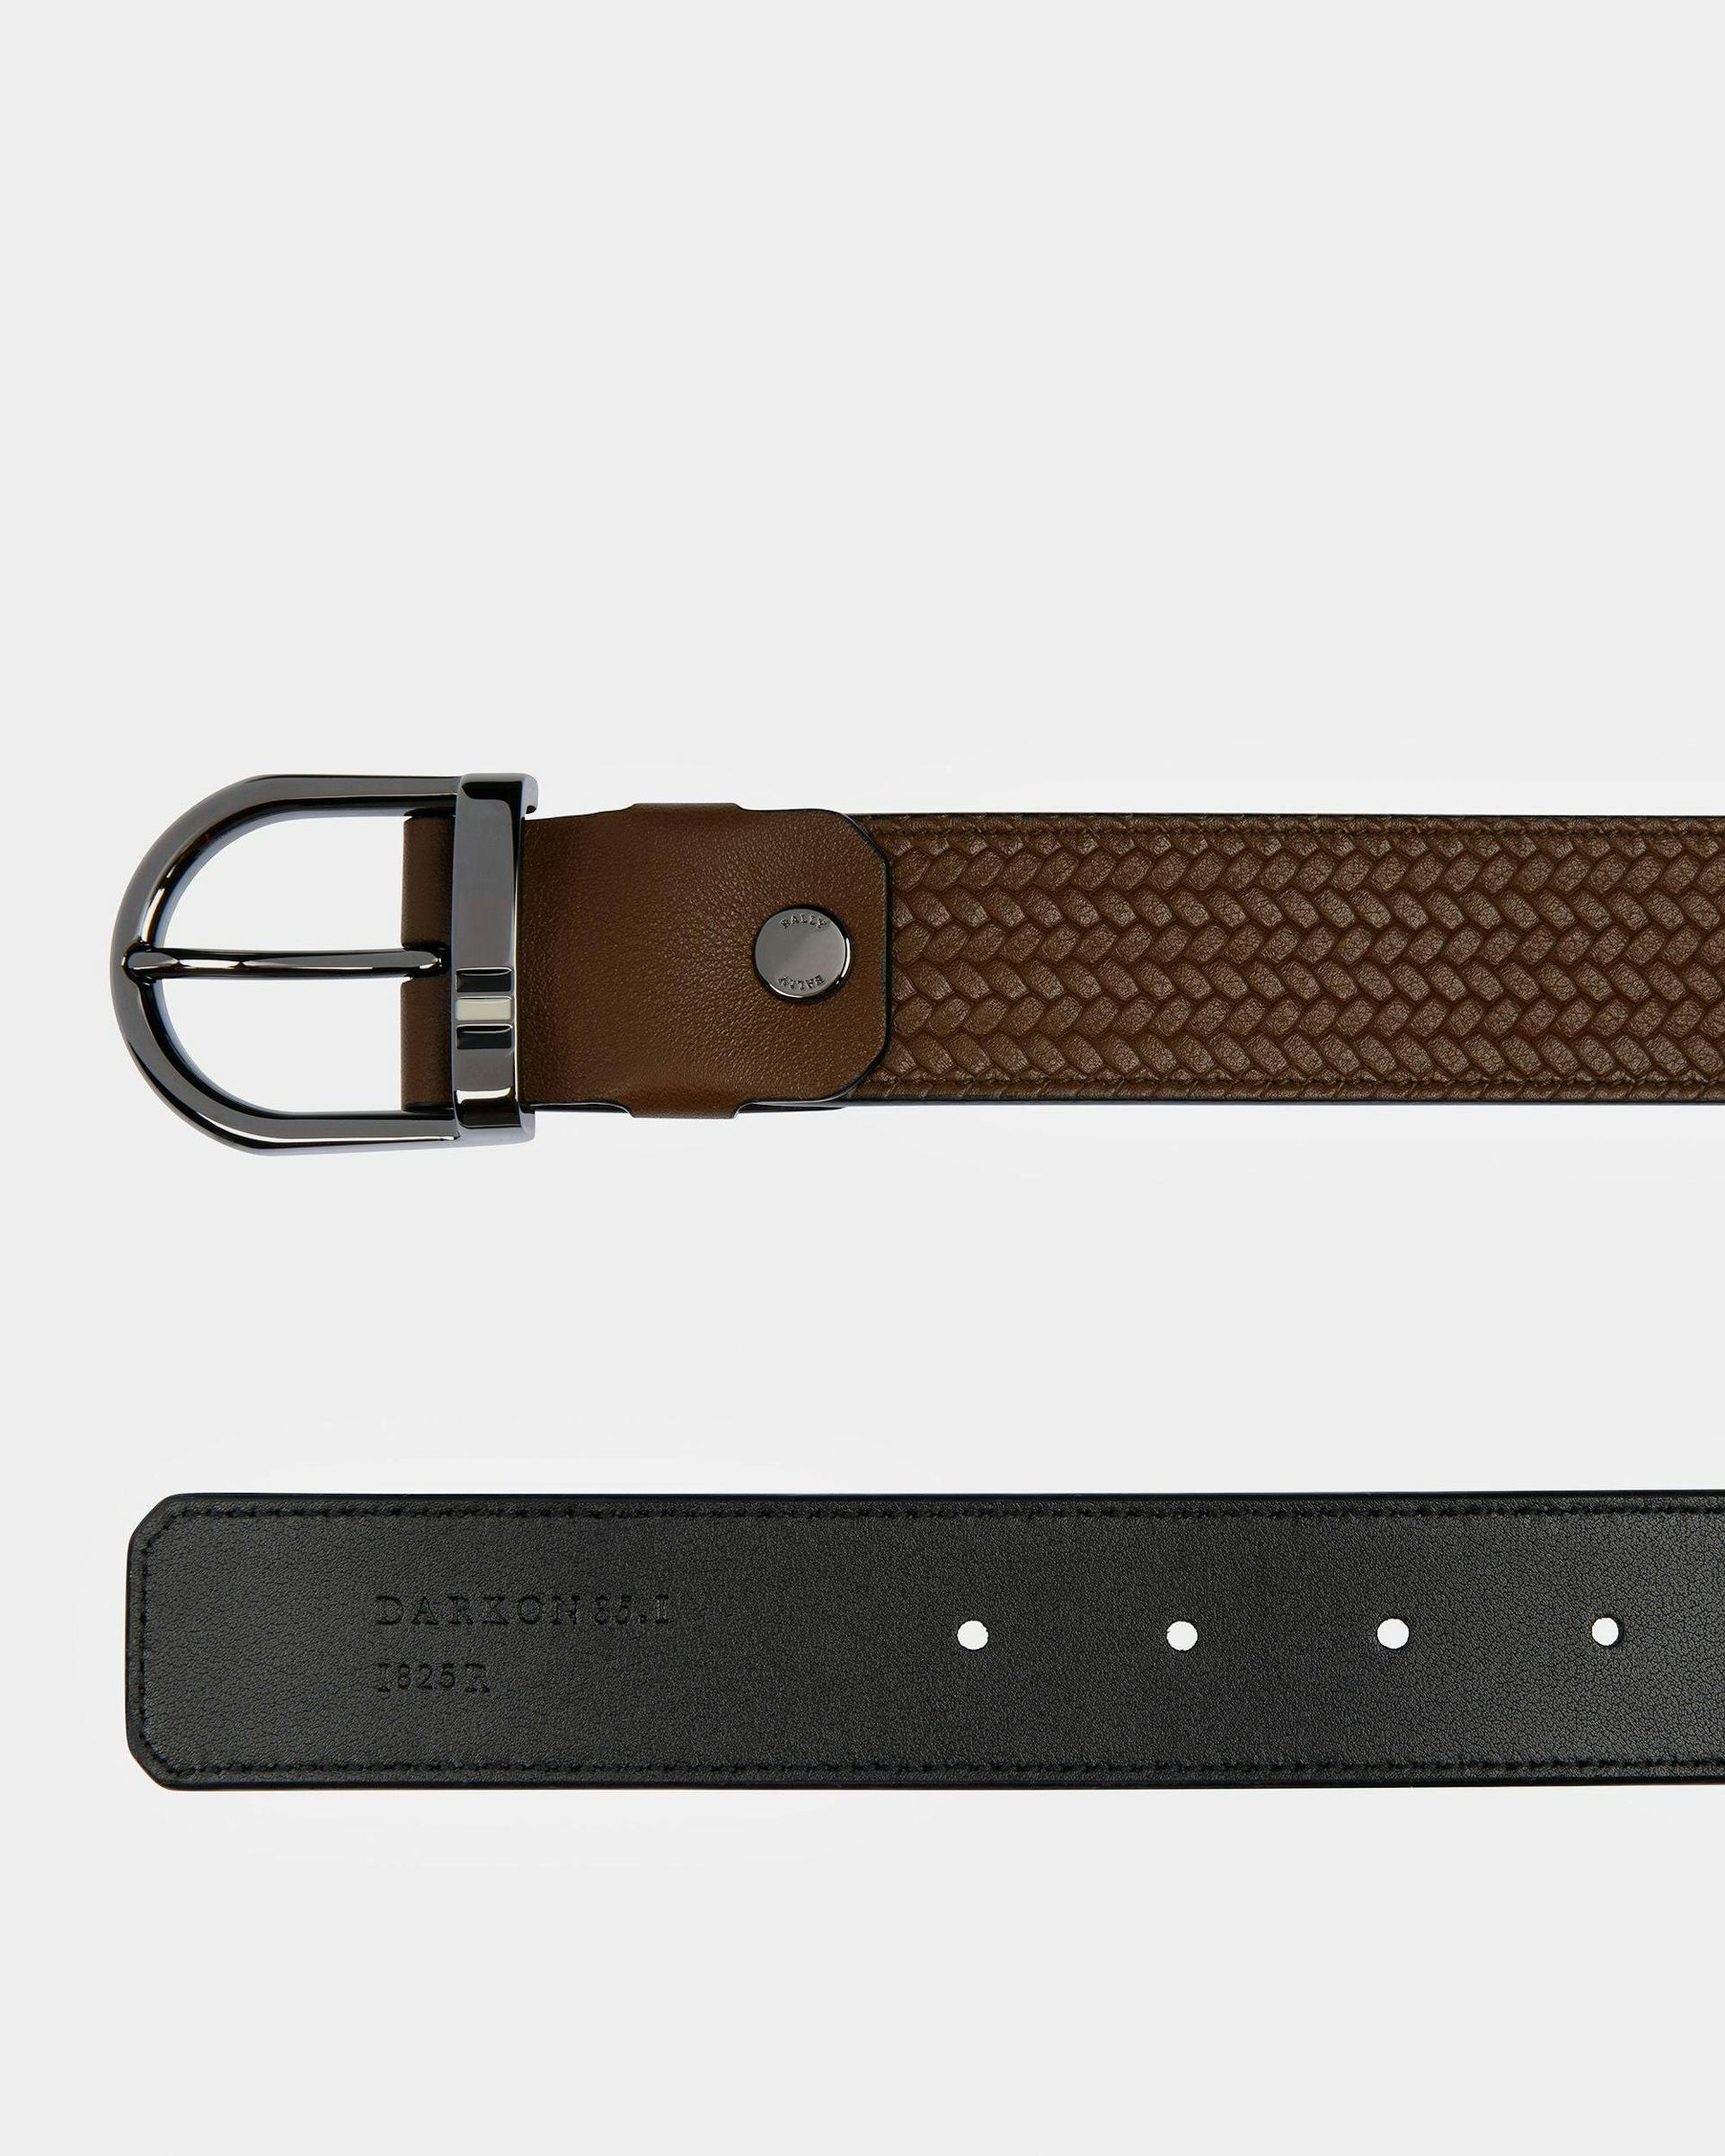 Darkon Leather Belt In Brown And Black - Men's - Bally - 02